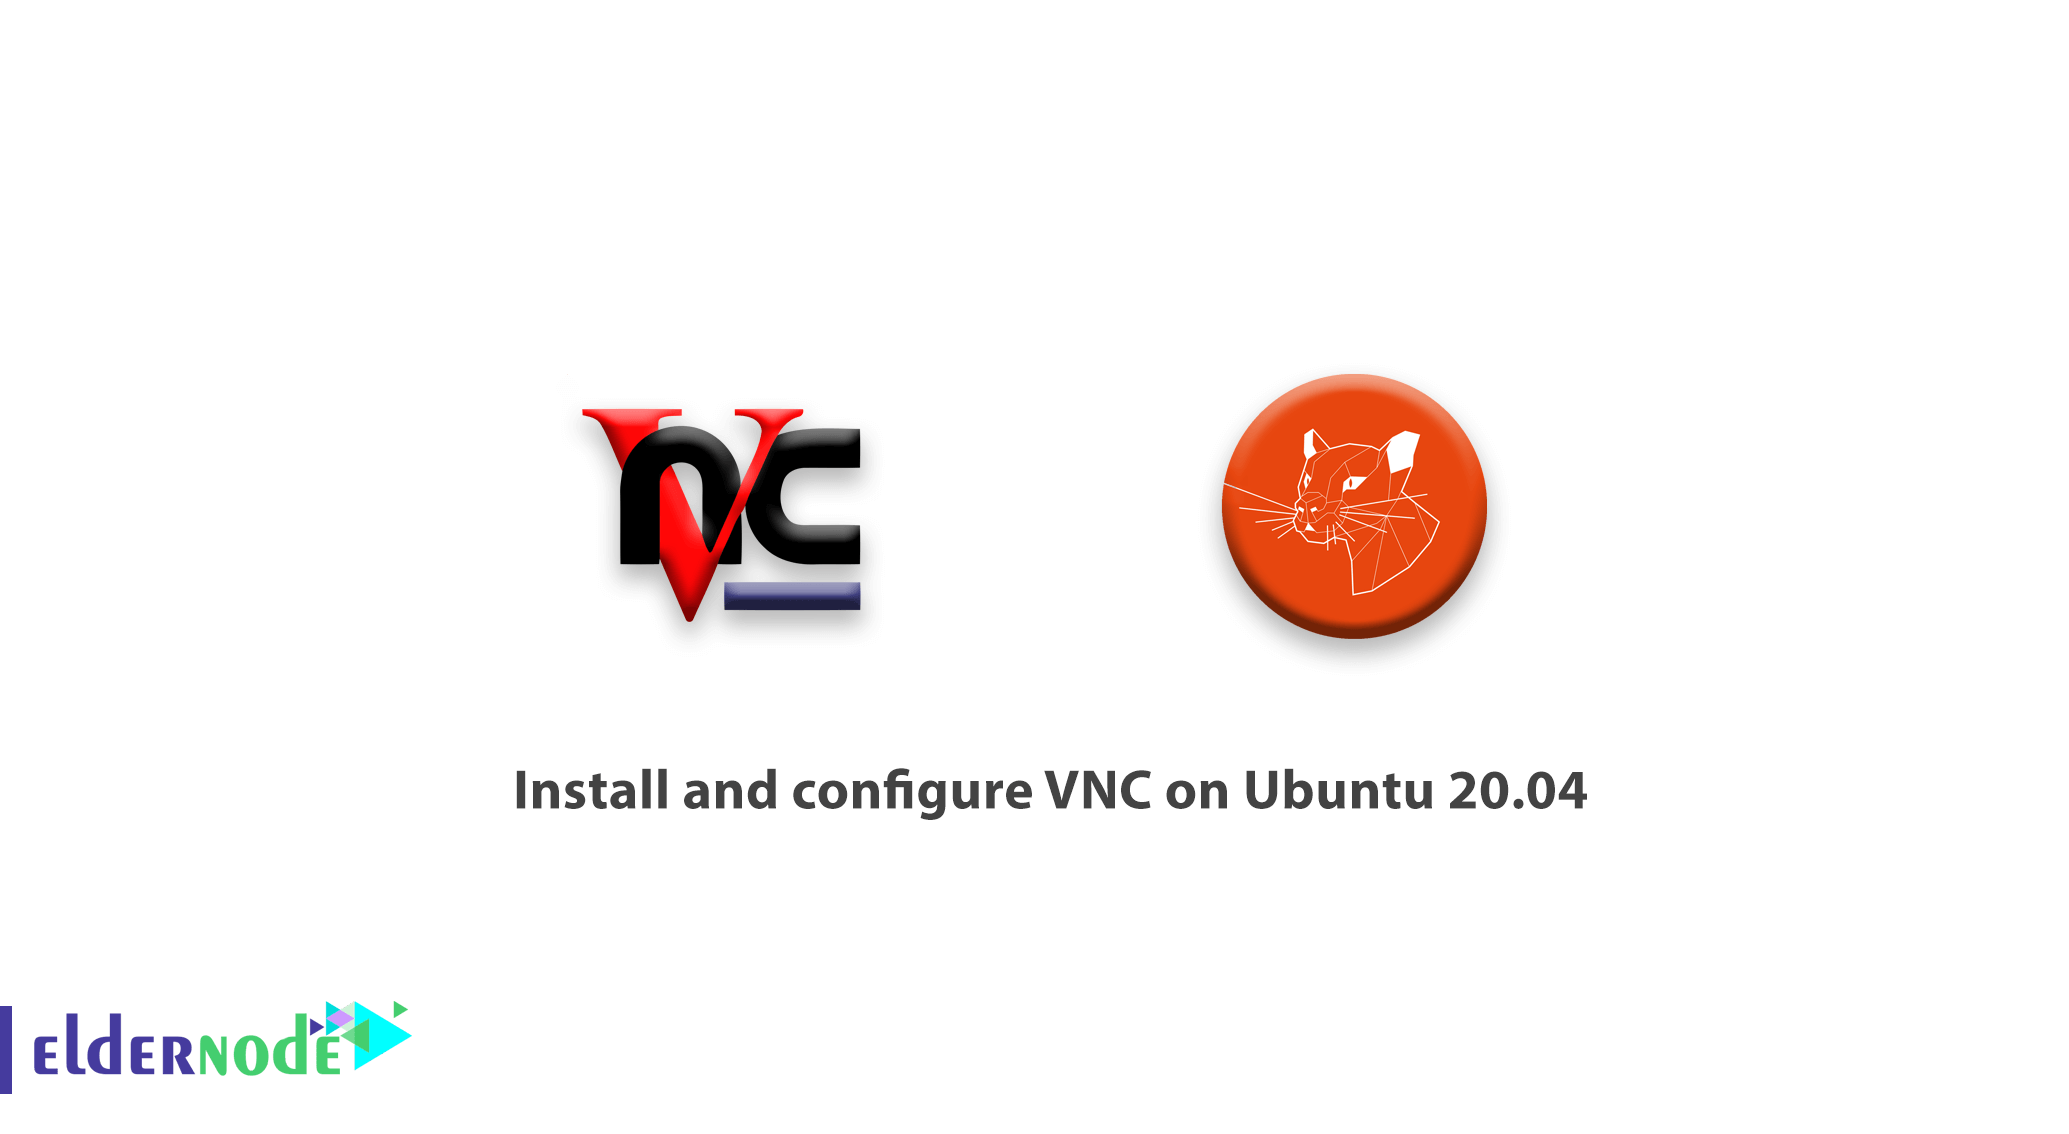 vnc viewer ubuntu 16.04 gns3 asa